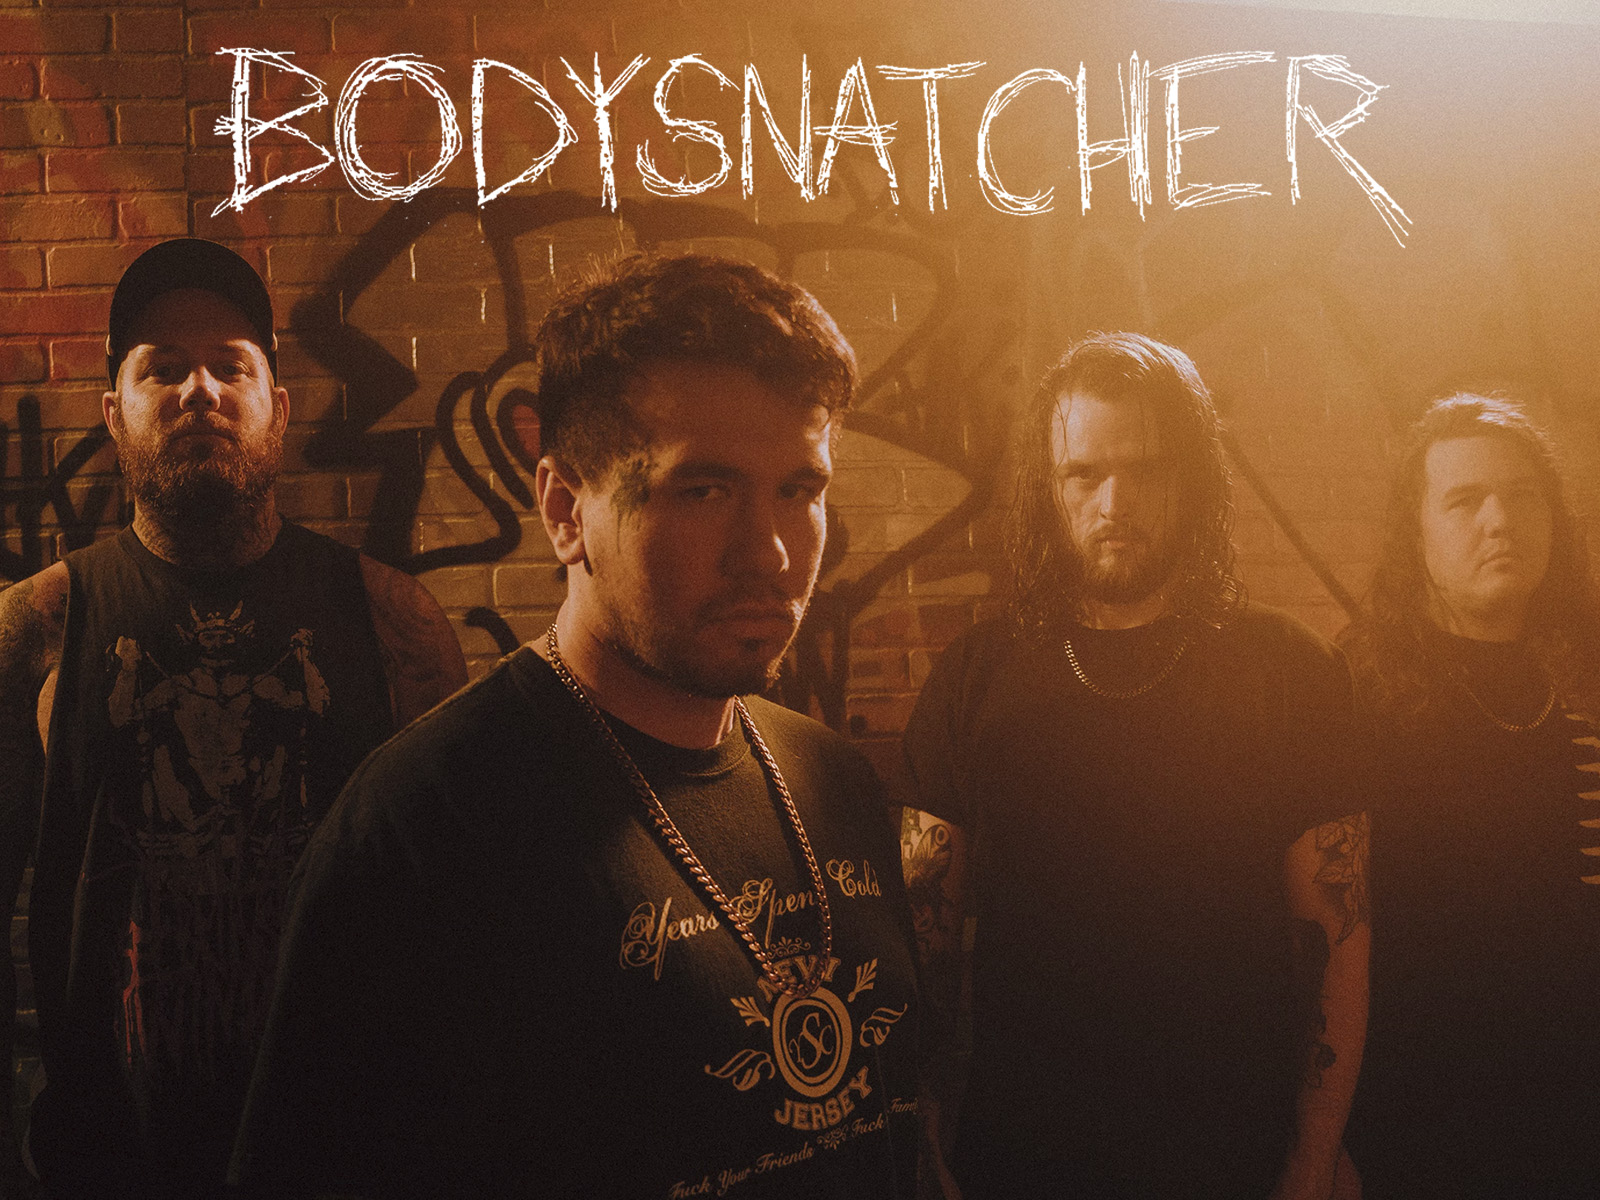 BodySnatcher